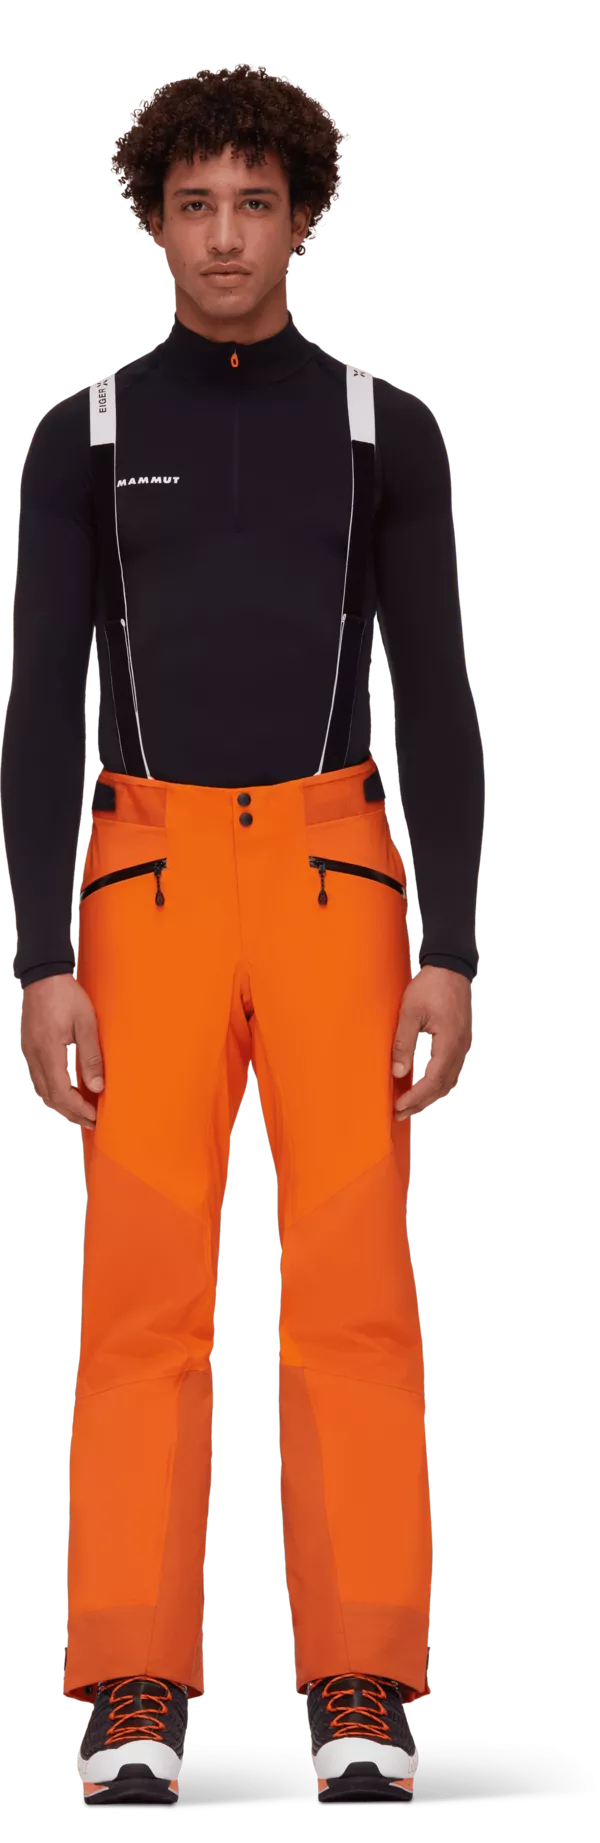 Zdjęcie 1 produktu Spodnie Nordwand Pro HS Pants Men